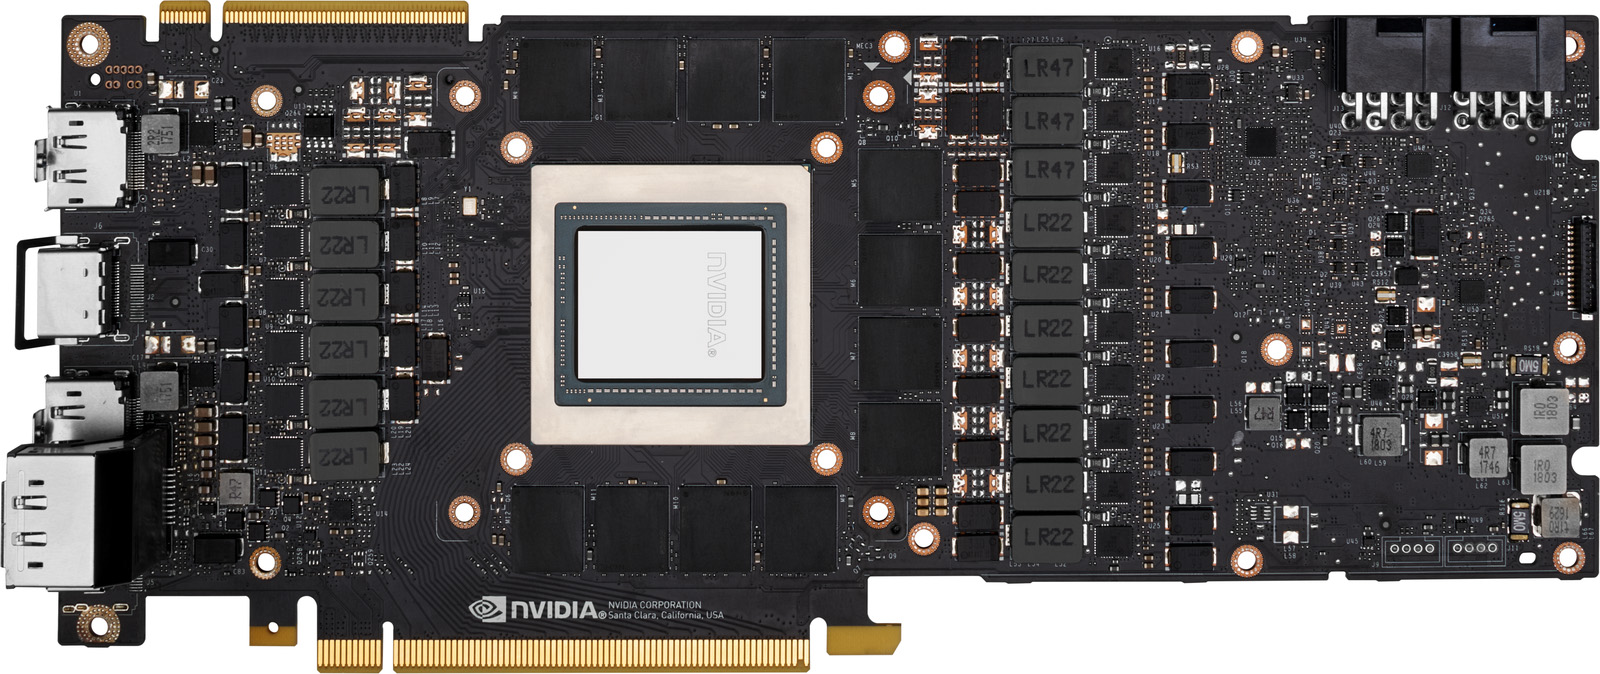 NVIDIA GeForce RTX 2080 & 2080 Ti 4K & Ultrawide Gaming Performance –  Techgage